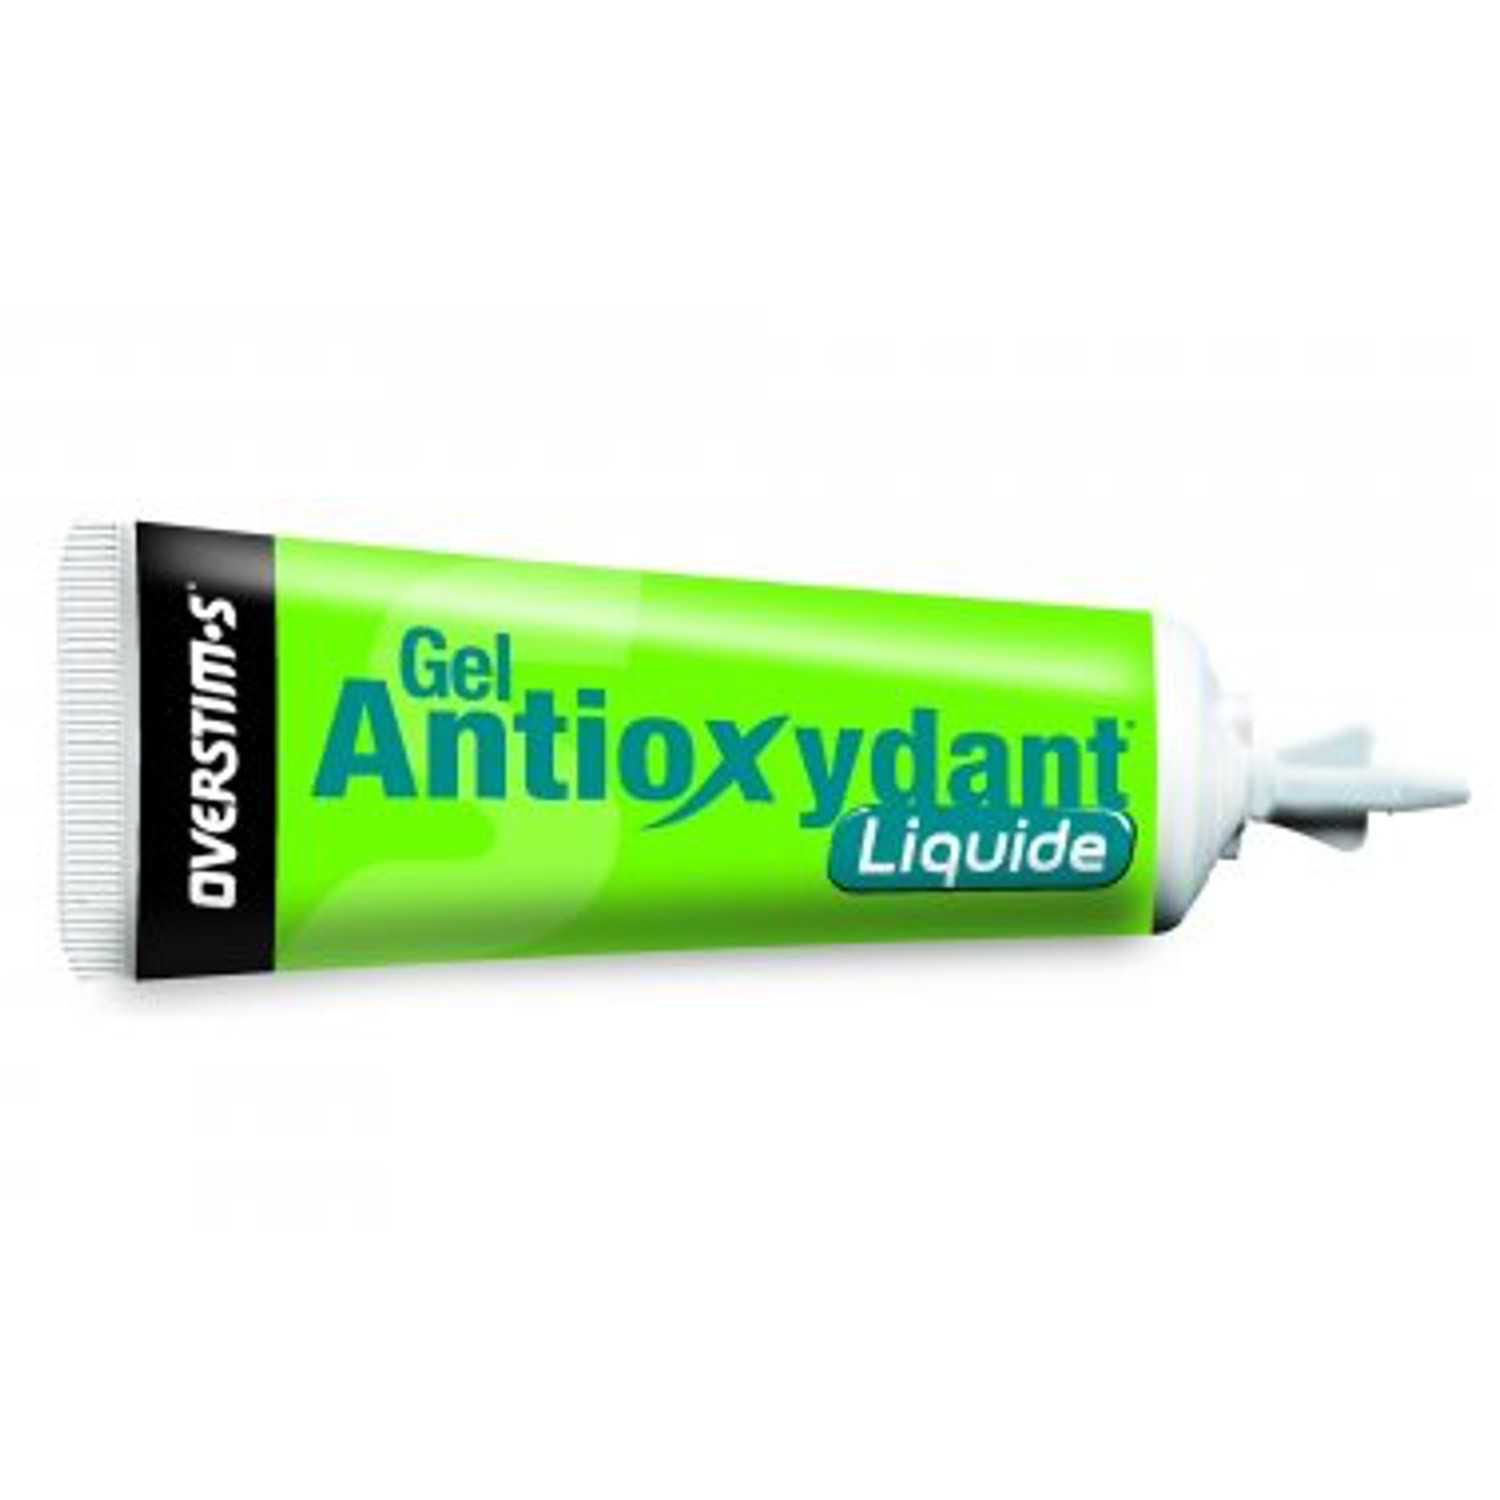 Gel Antioxydant Liquide - Pomme Verte